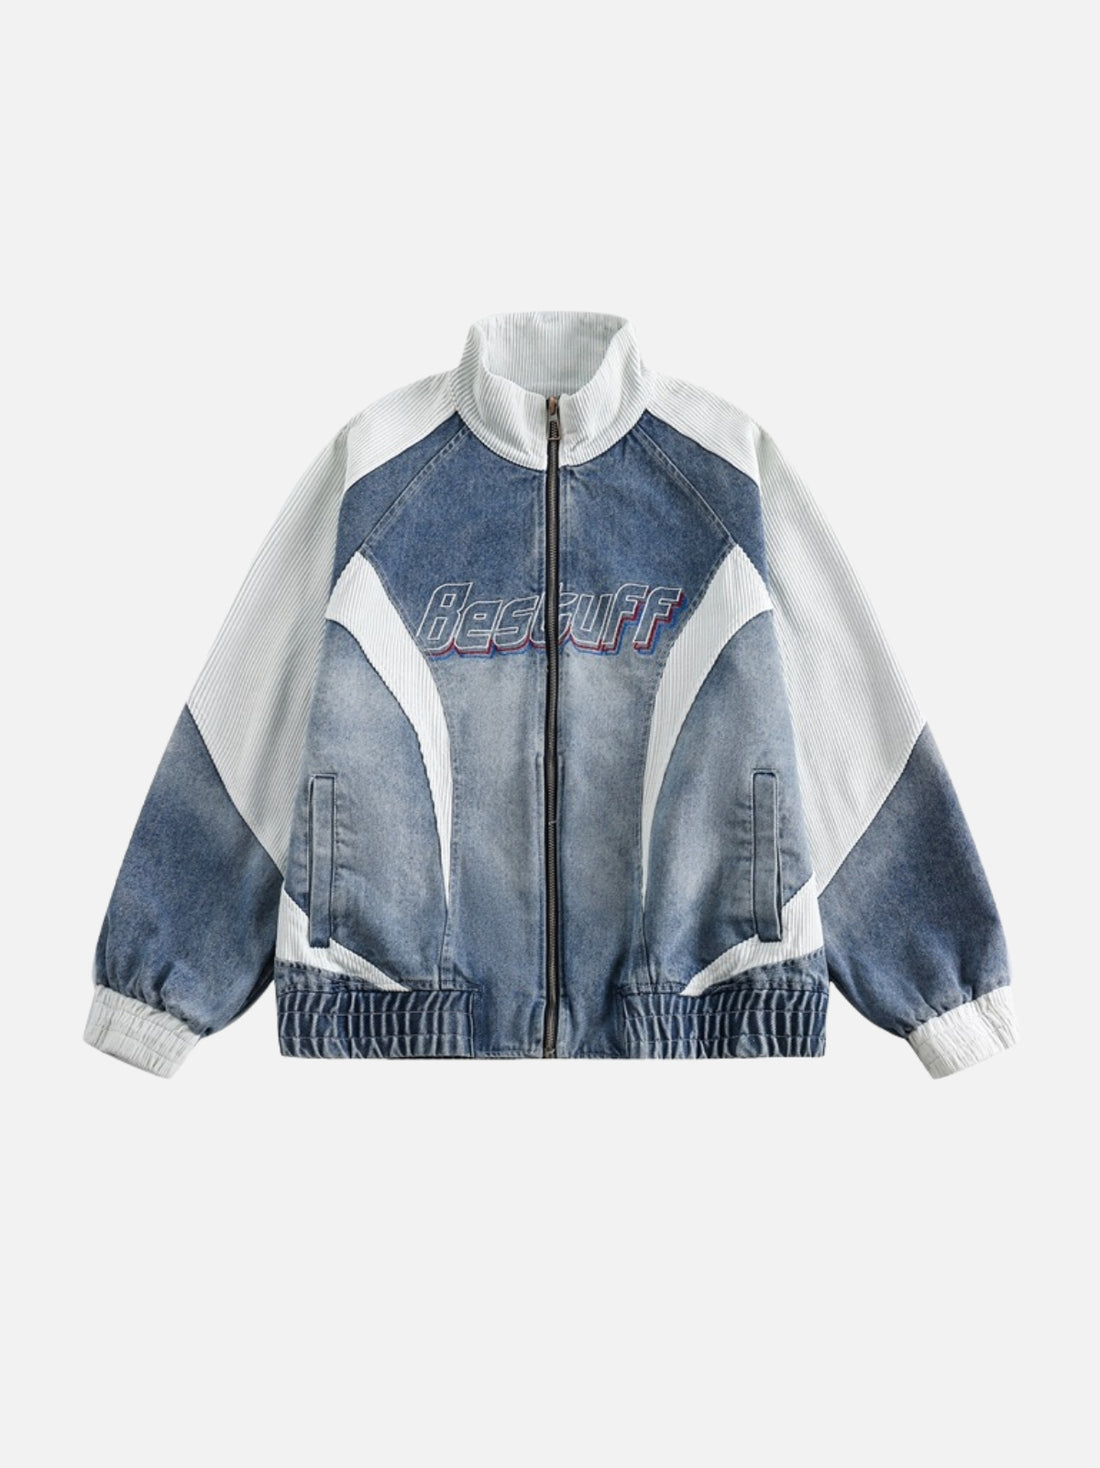 BESTUFF - Denim Patchwork Jacket Blue | Teenwear.eu